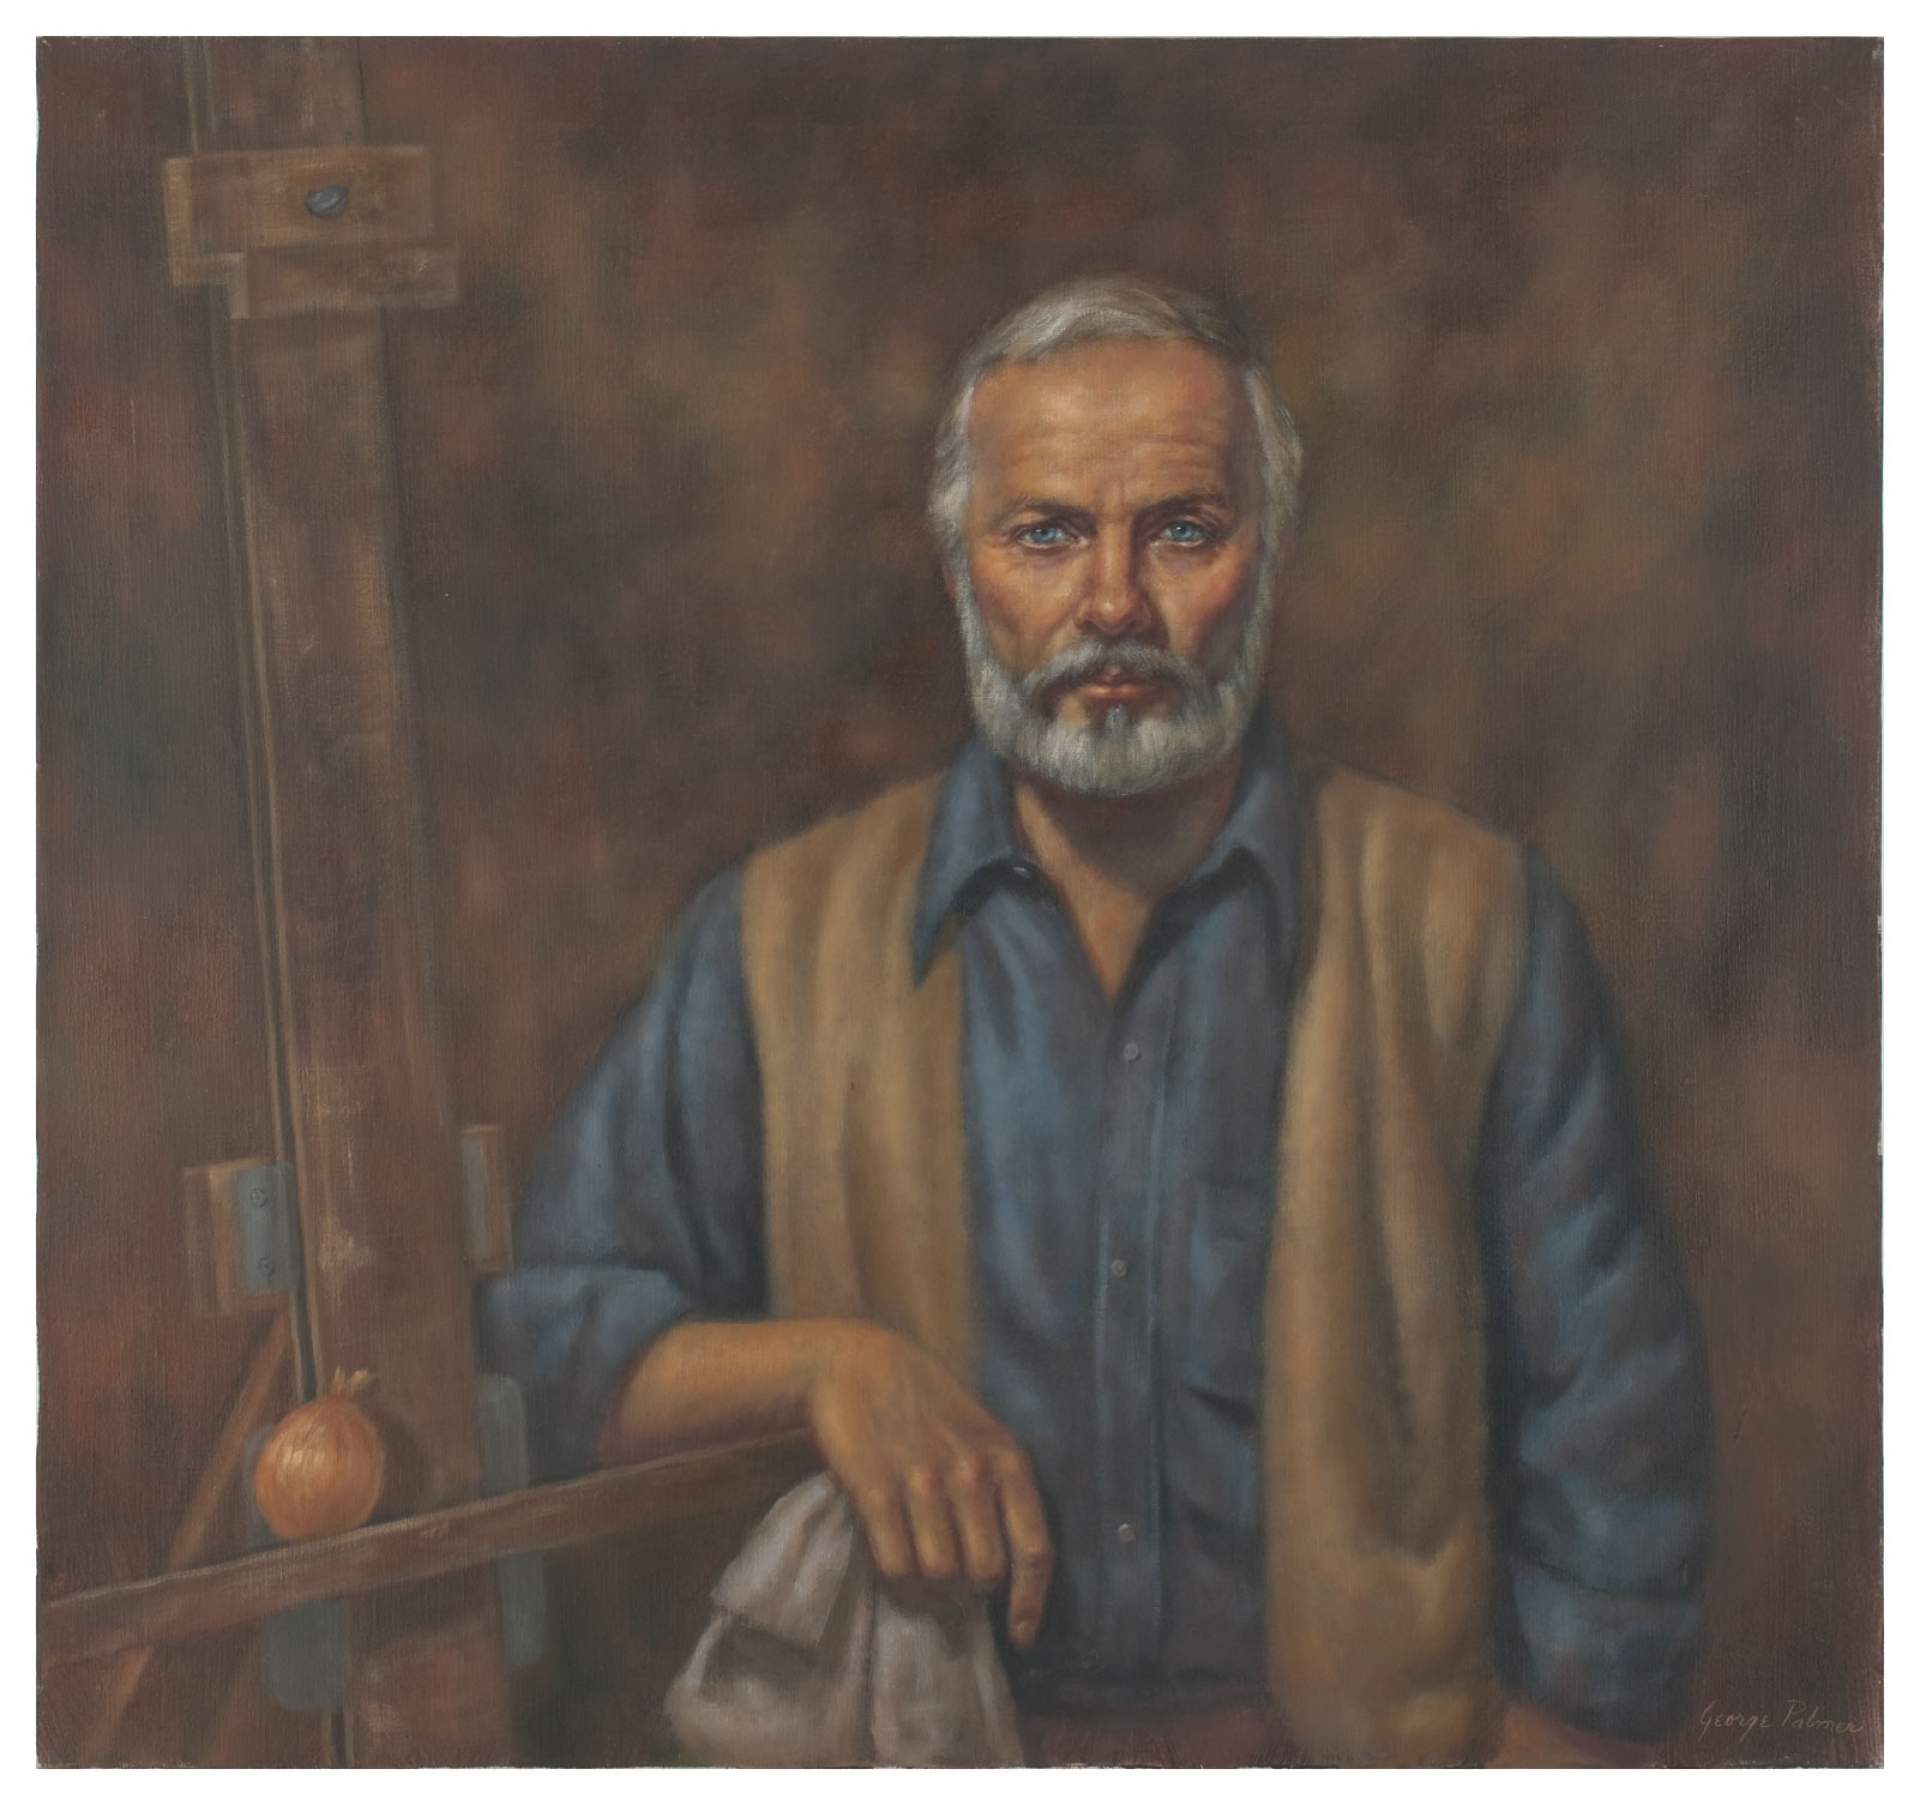 Portrait of Donald Haug